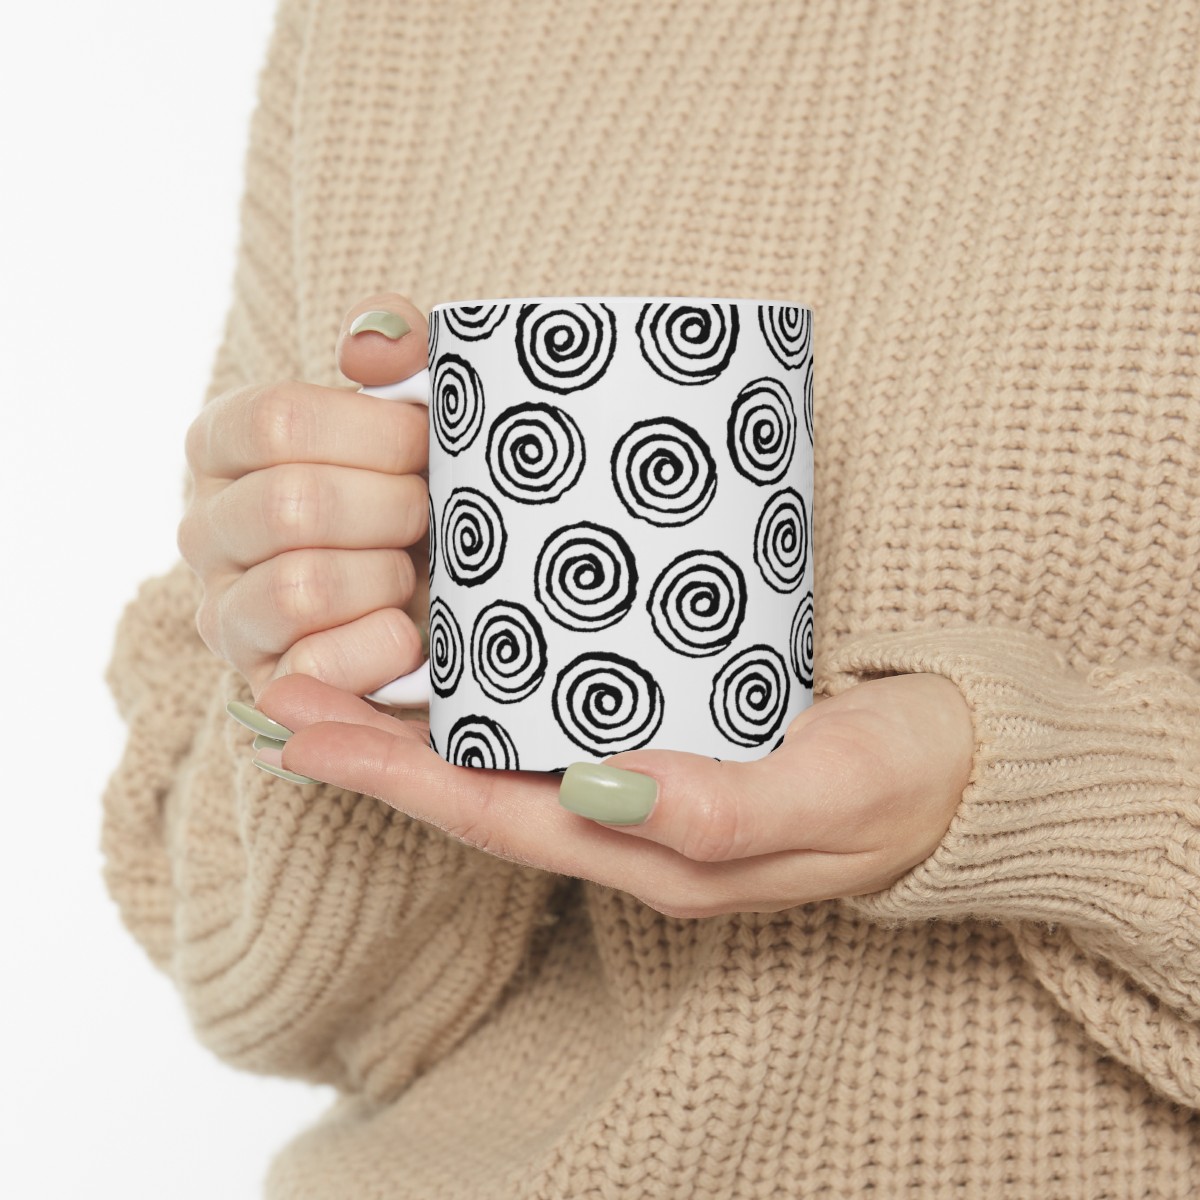 Ceramic Mug Black Spiral product thumbnail image